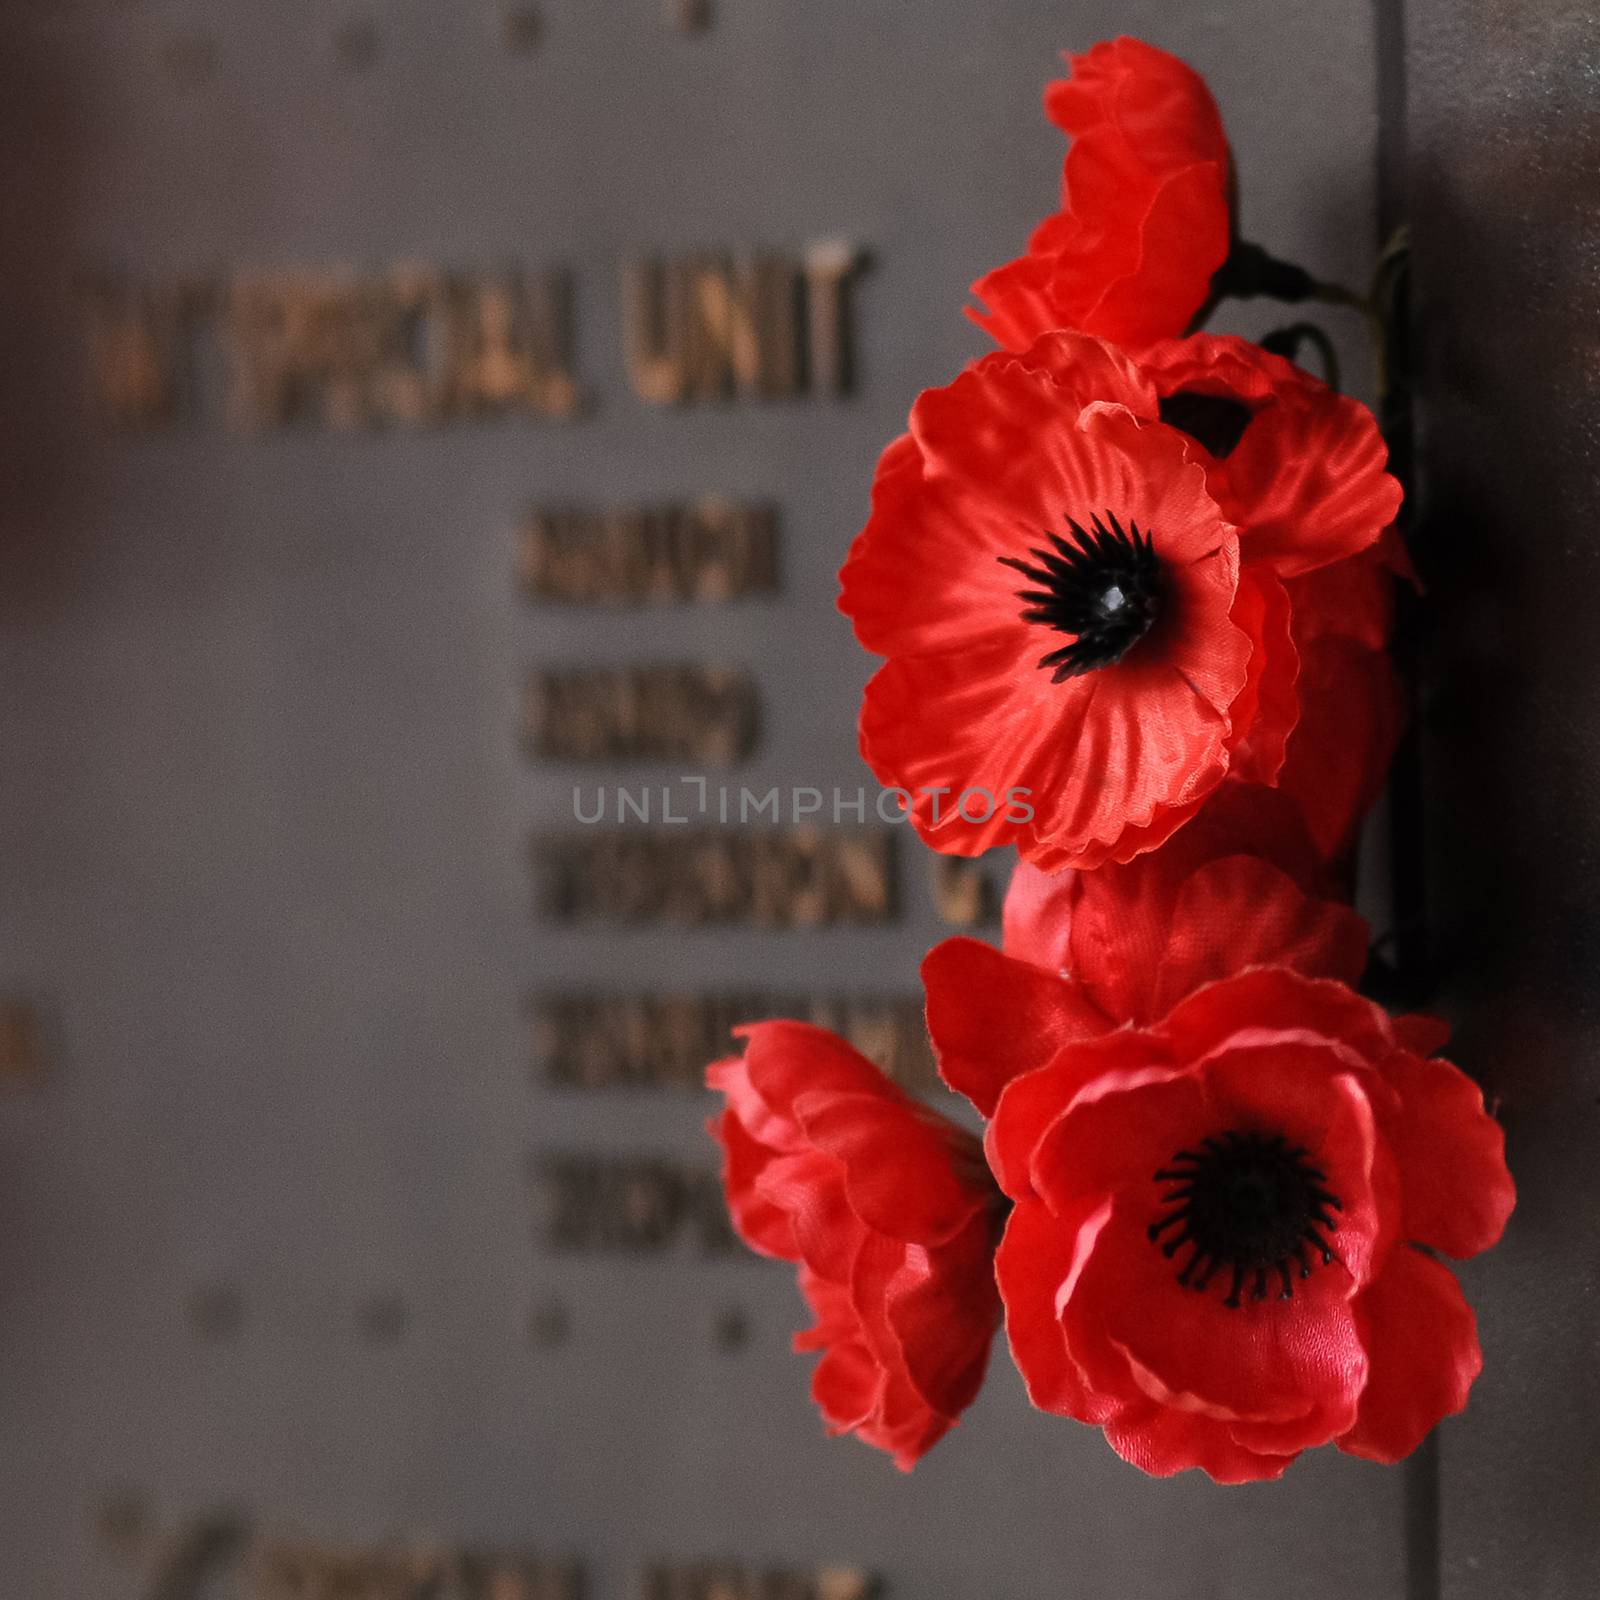 Red Poppy flower to honour the fallen veteran hero on Anzac Day